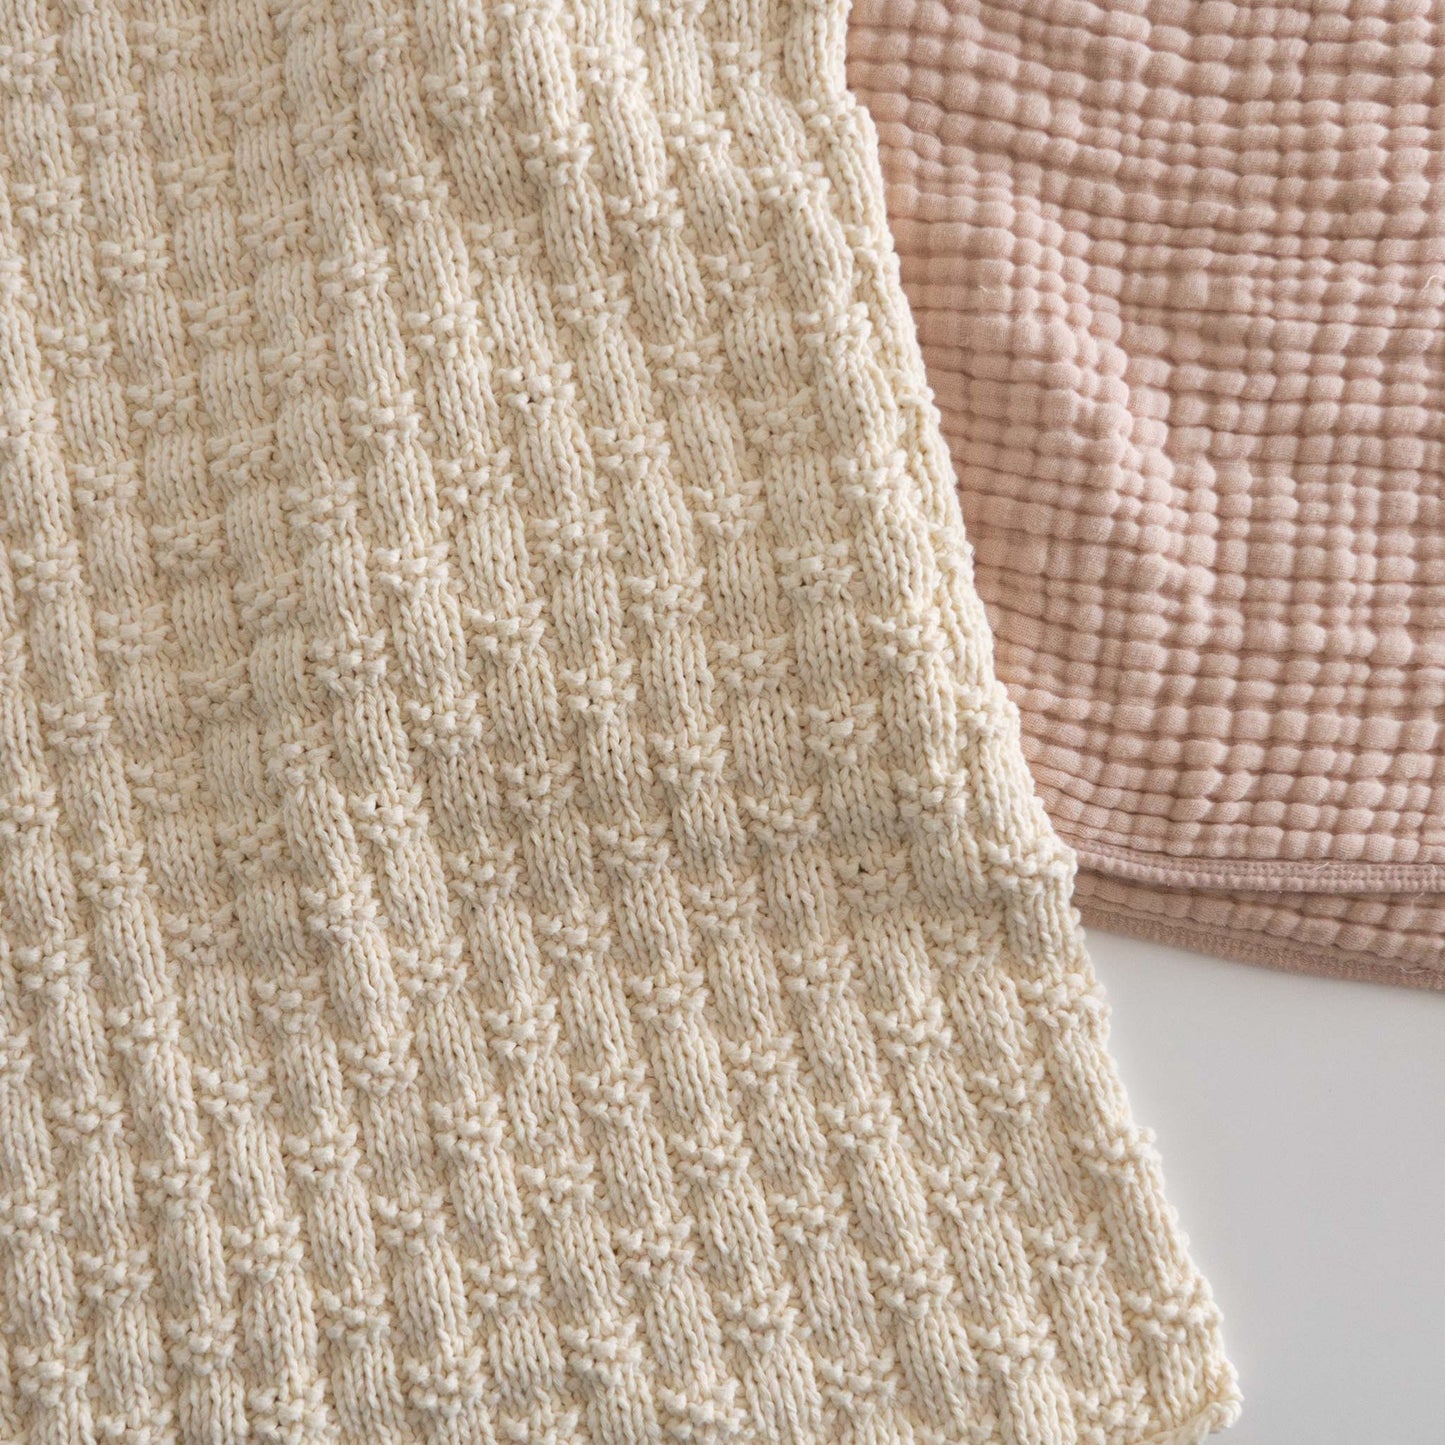 Modern Cuddle Knit Baby Blanket PDF